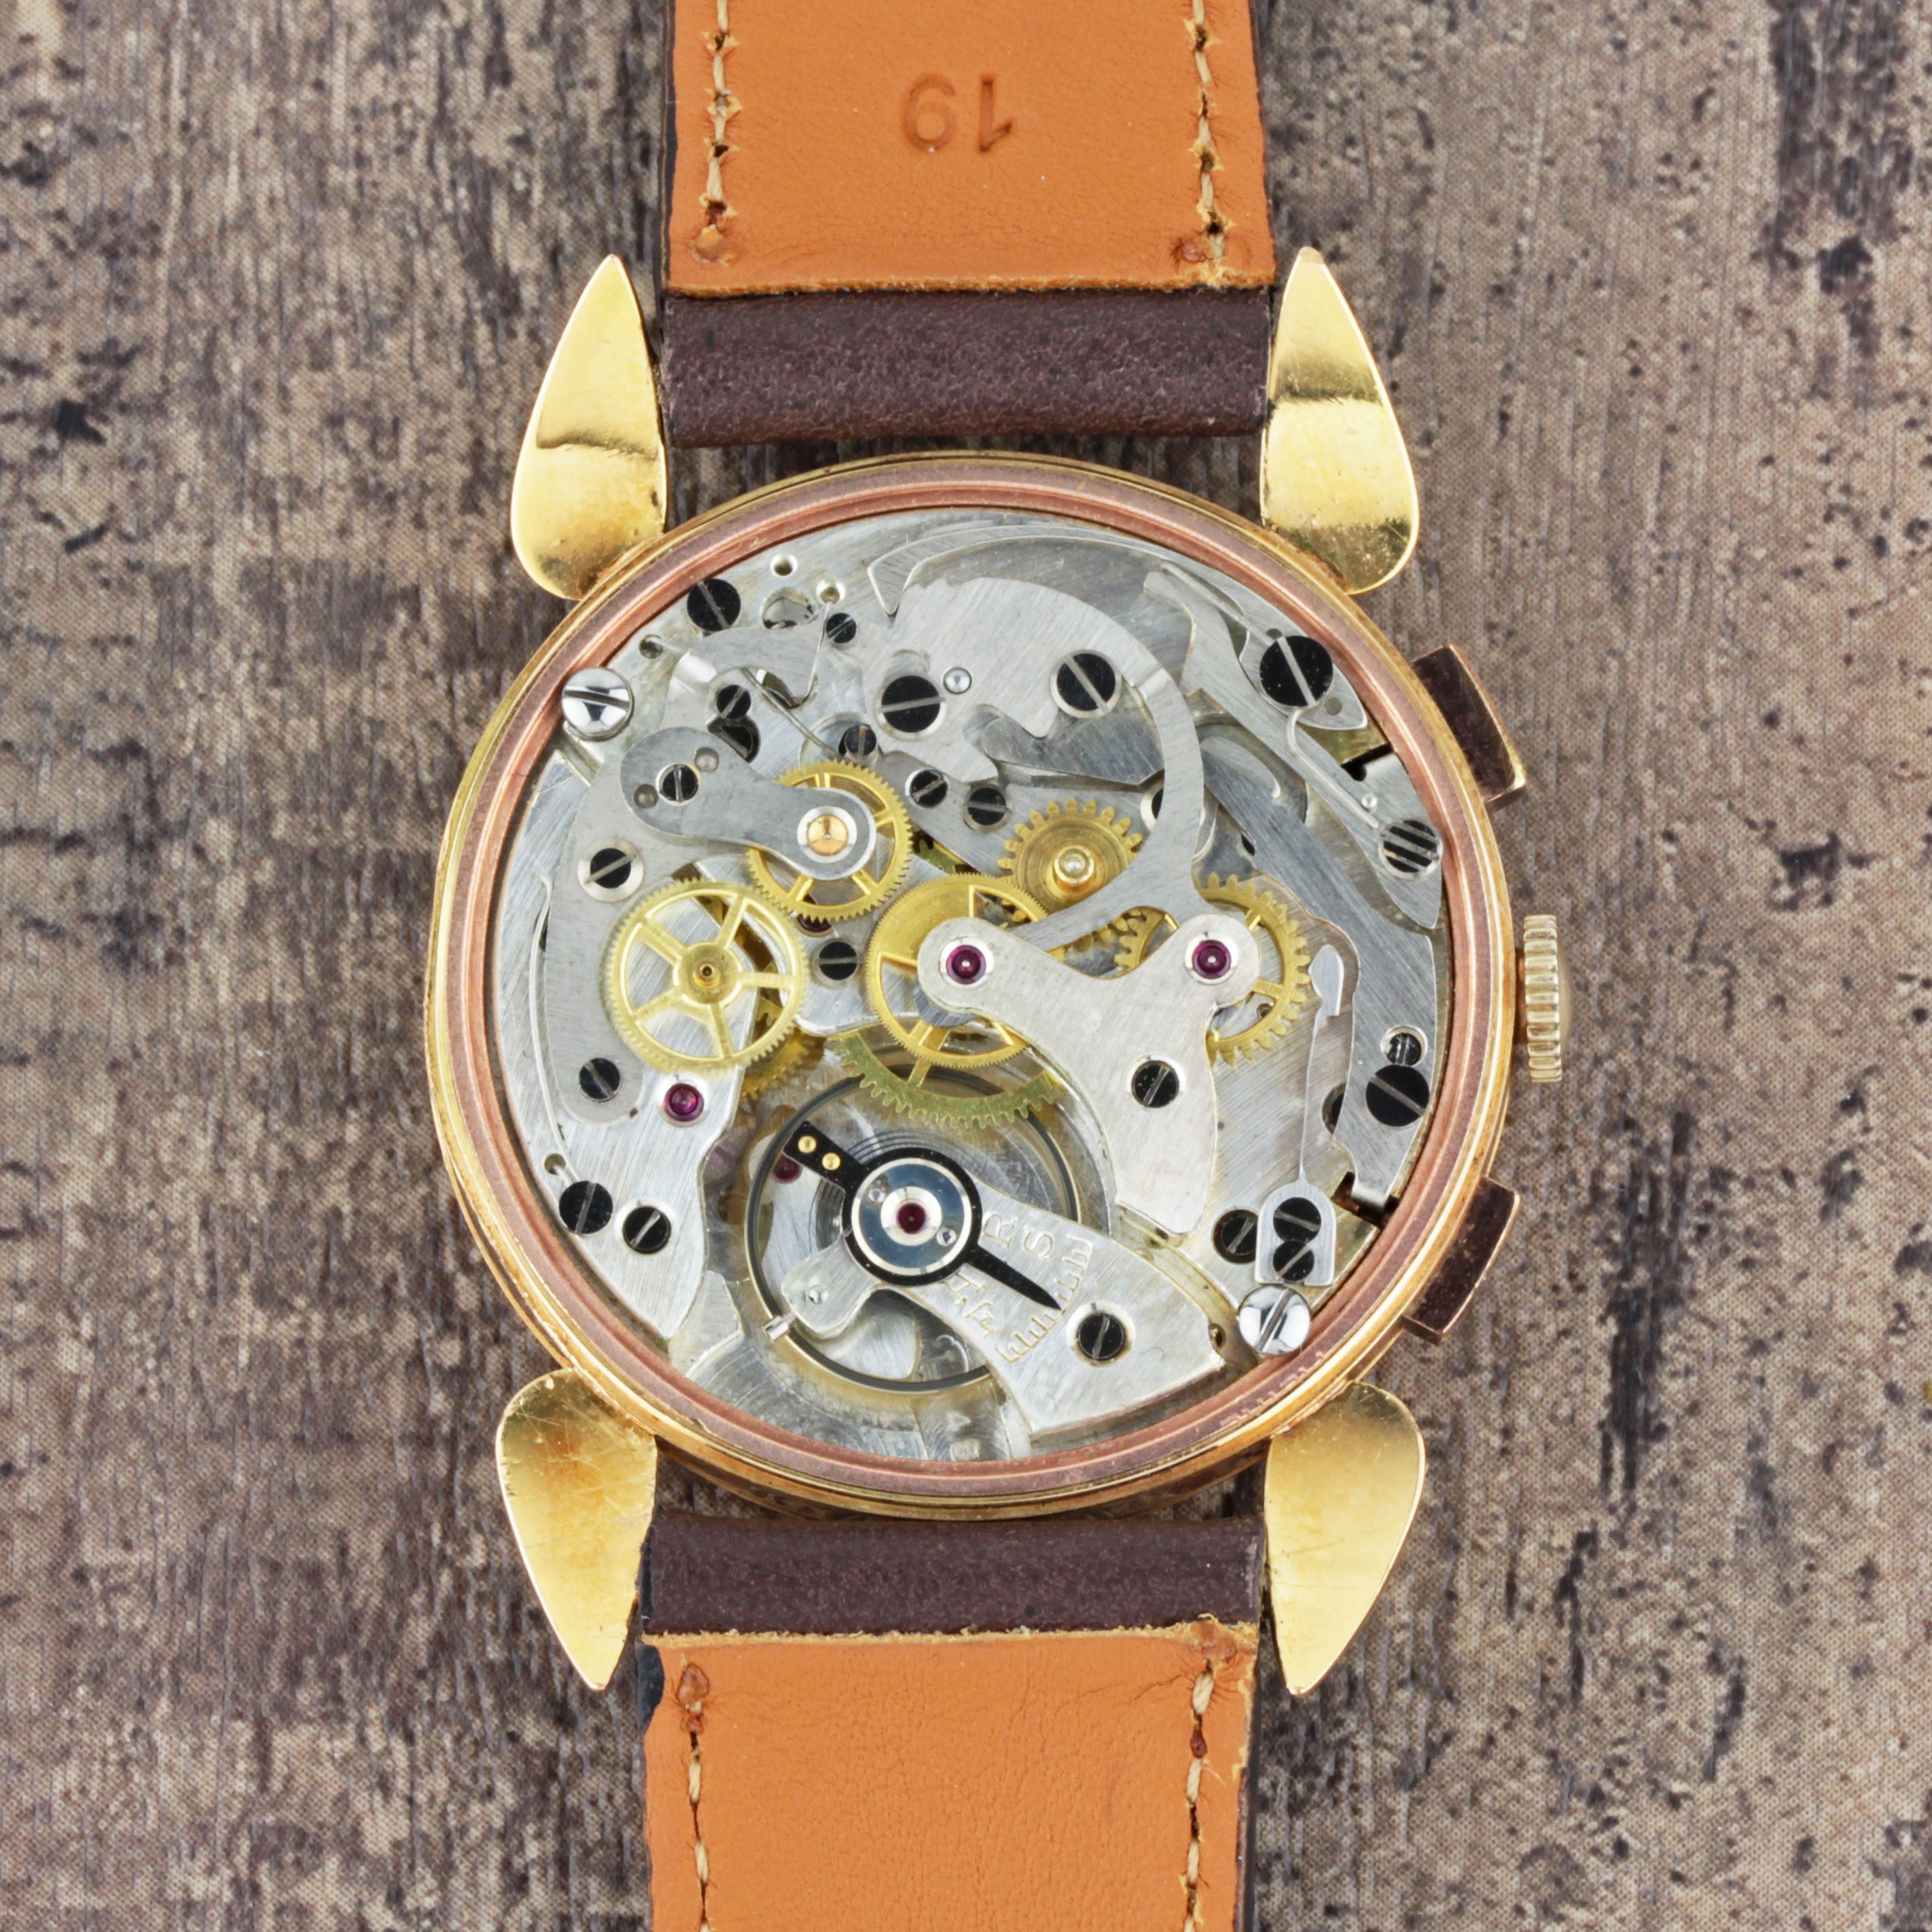 Lycke "Chronographe Suisse" c.1950 18k Chronograph